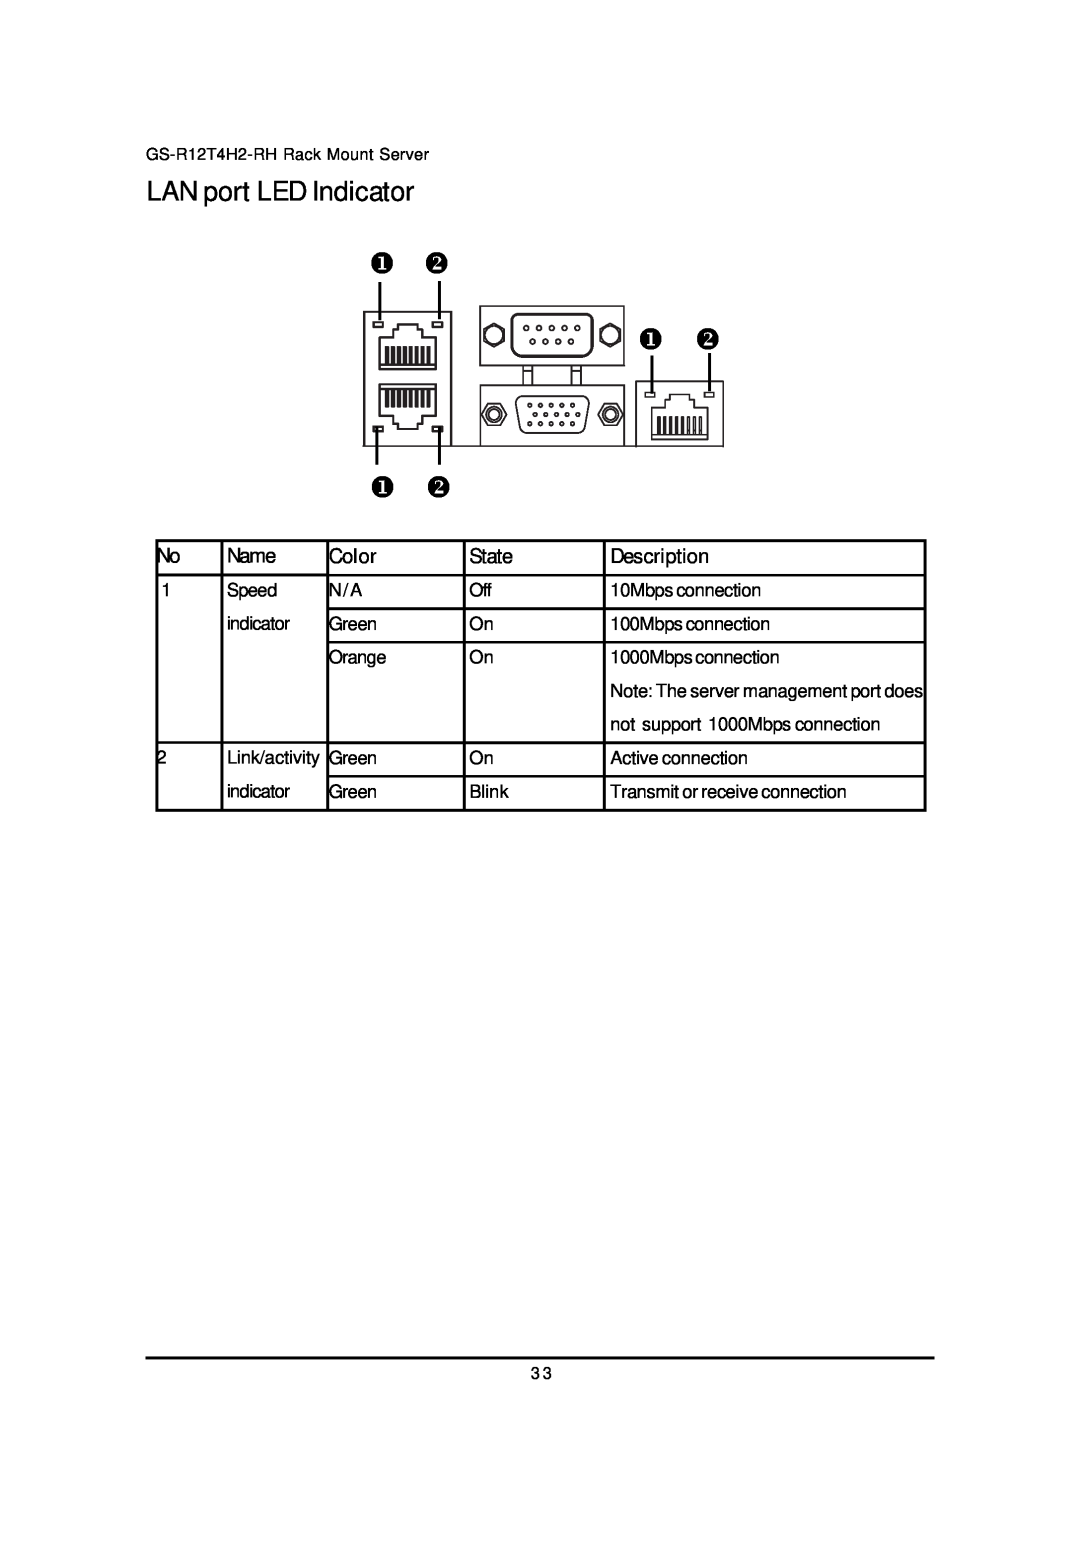 Gigabyte GS-R12T4H2-RH manual LAN port LED Indicator,    , Name, Color, State, Description 